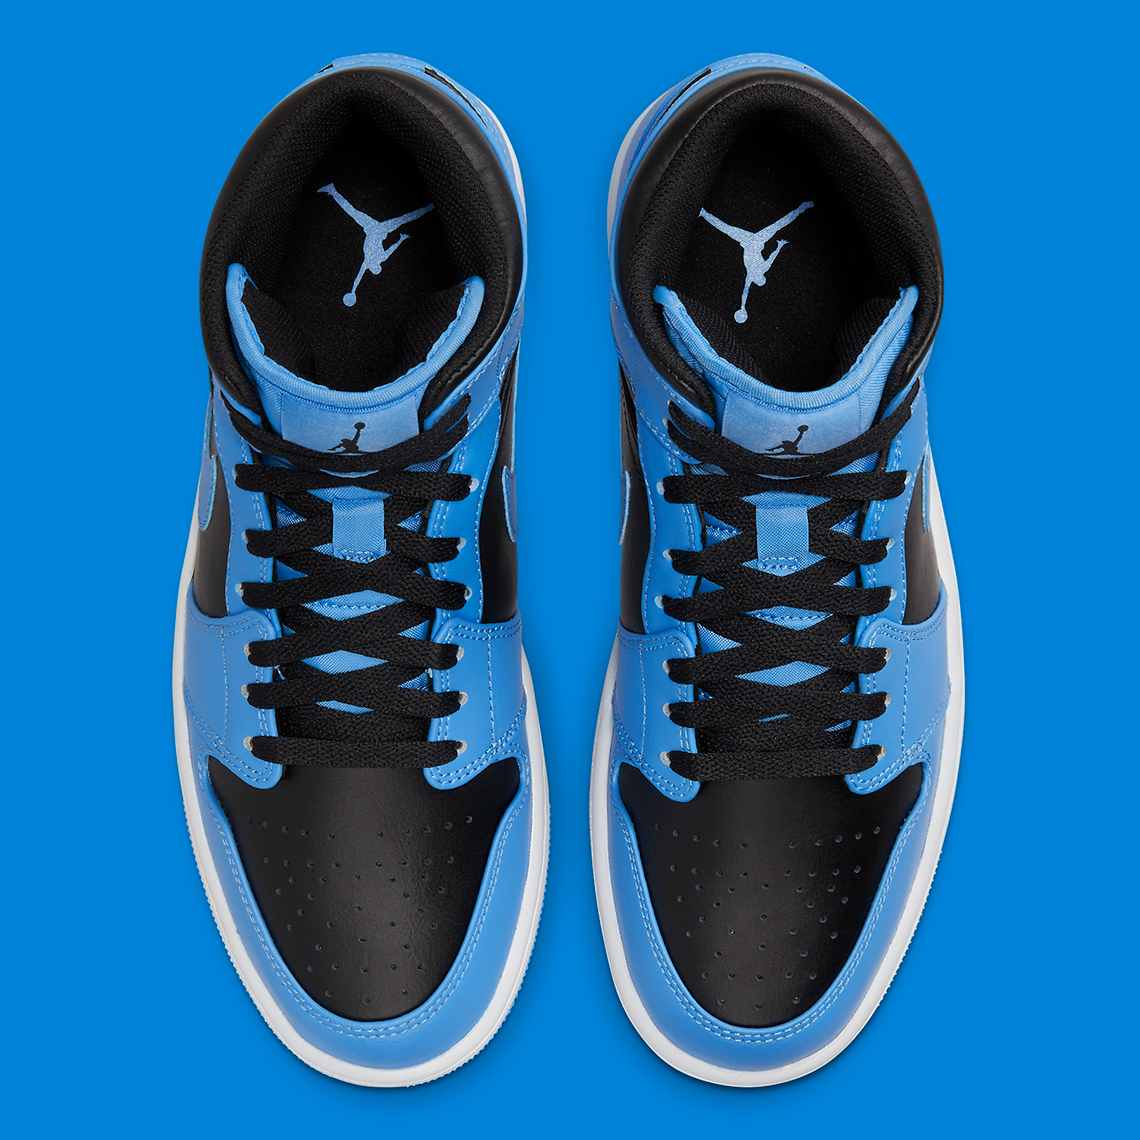 The Air Jordan 1 Mid University Blue Black Comes In Full Family